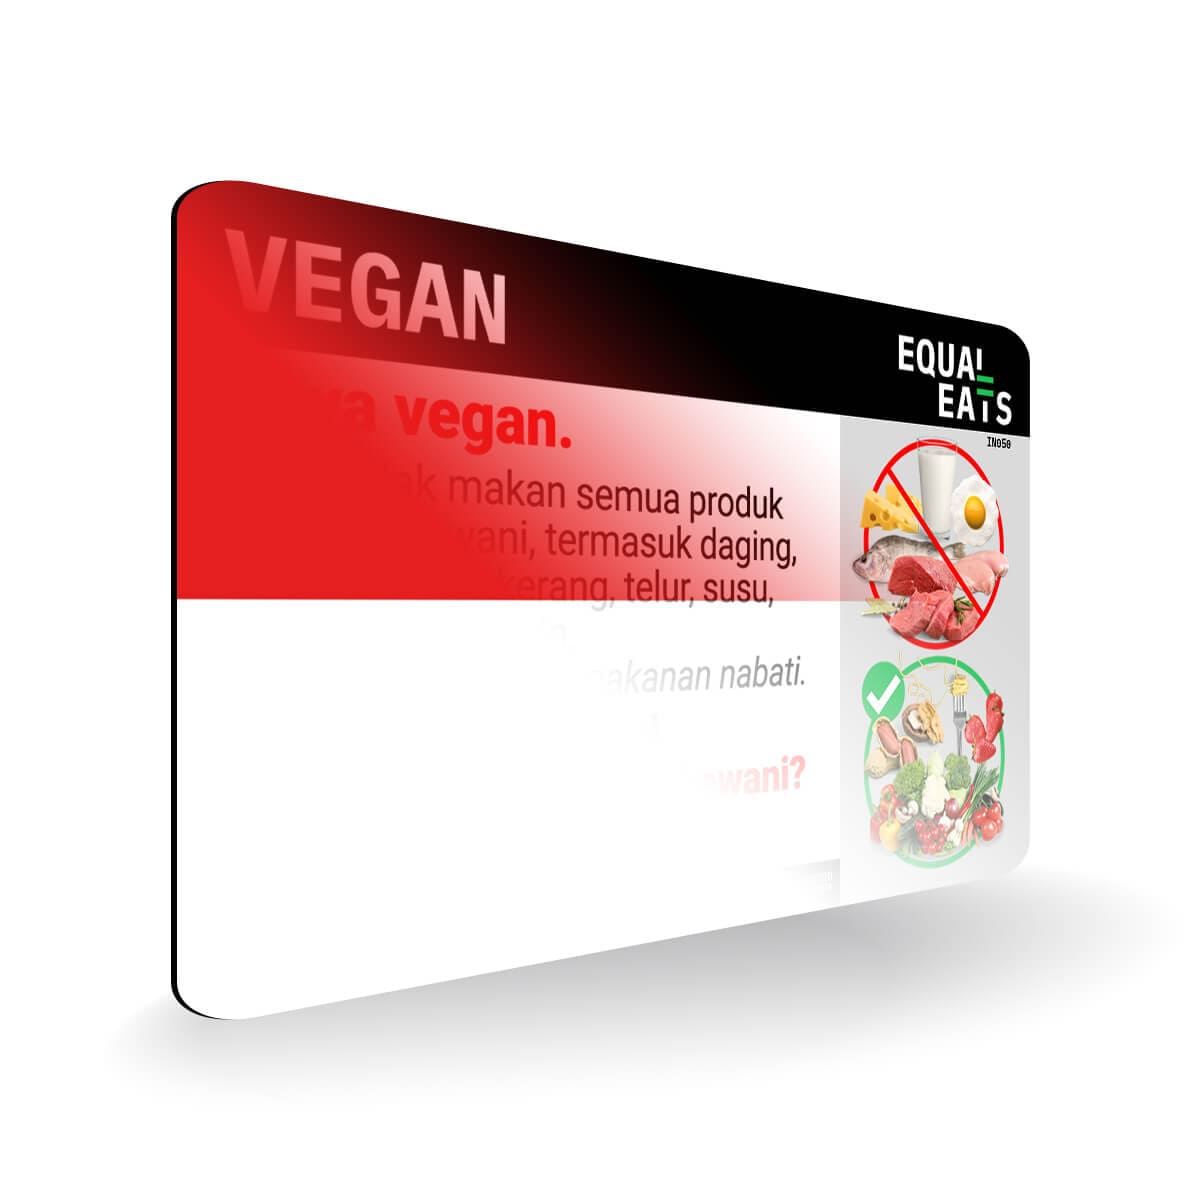 Vegan Diet in Indonesian. Vegan Card for Indonesia